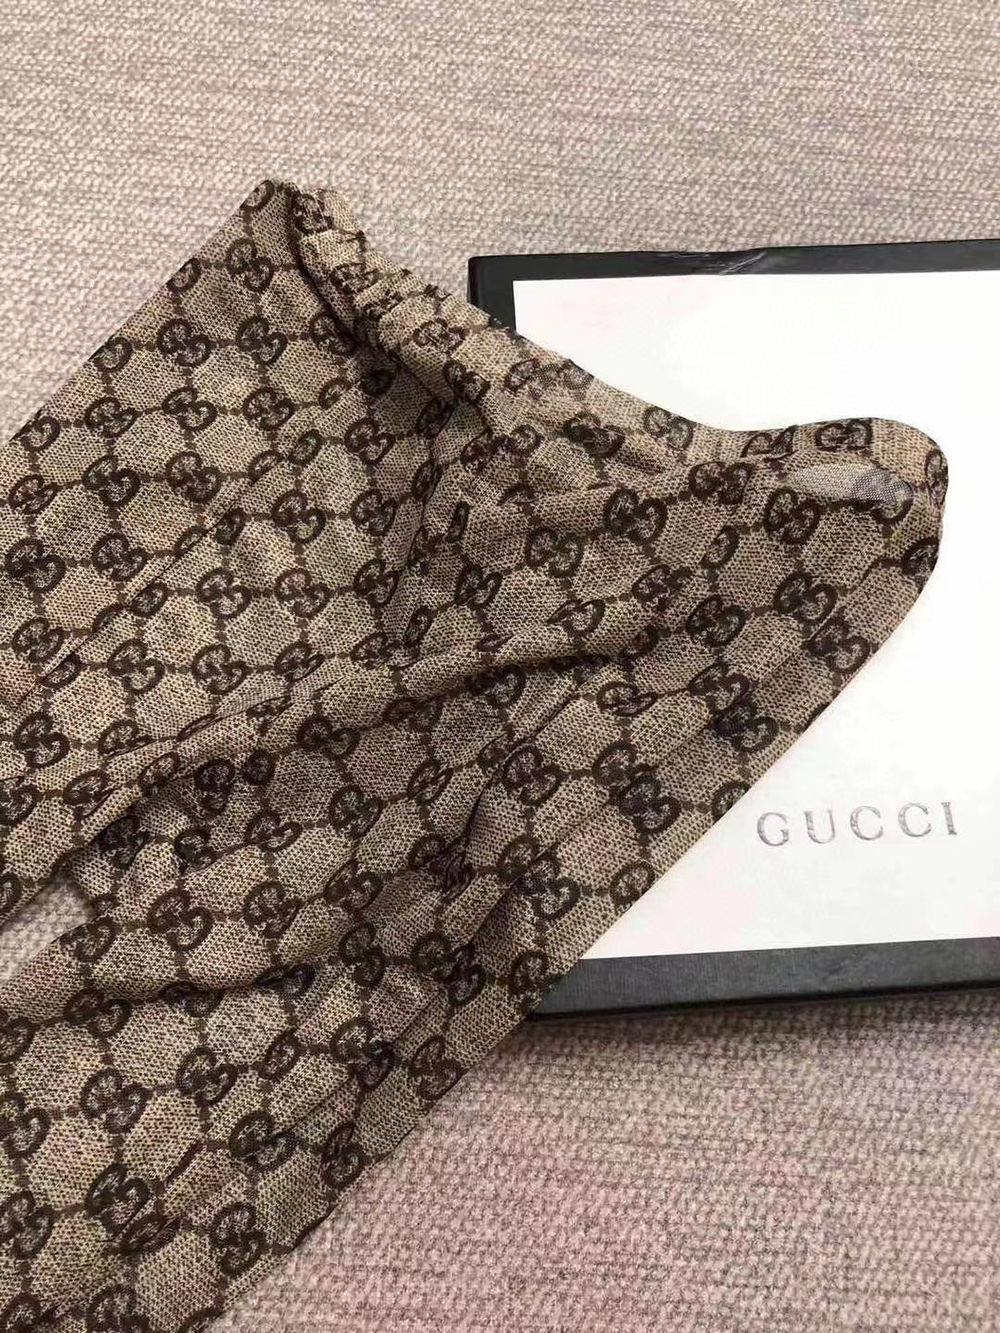 Gucci Interlocking Tights